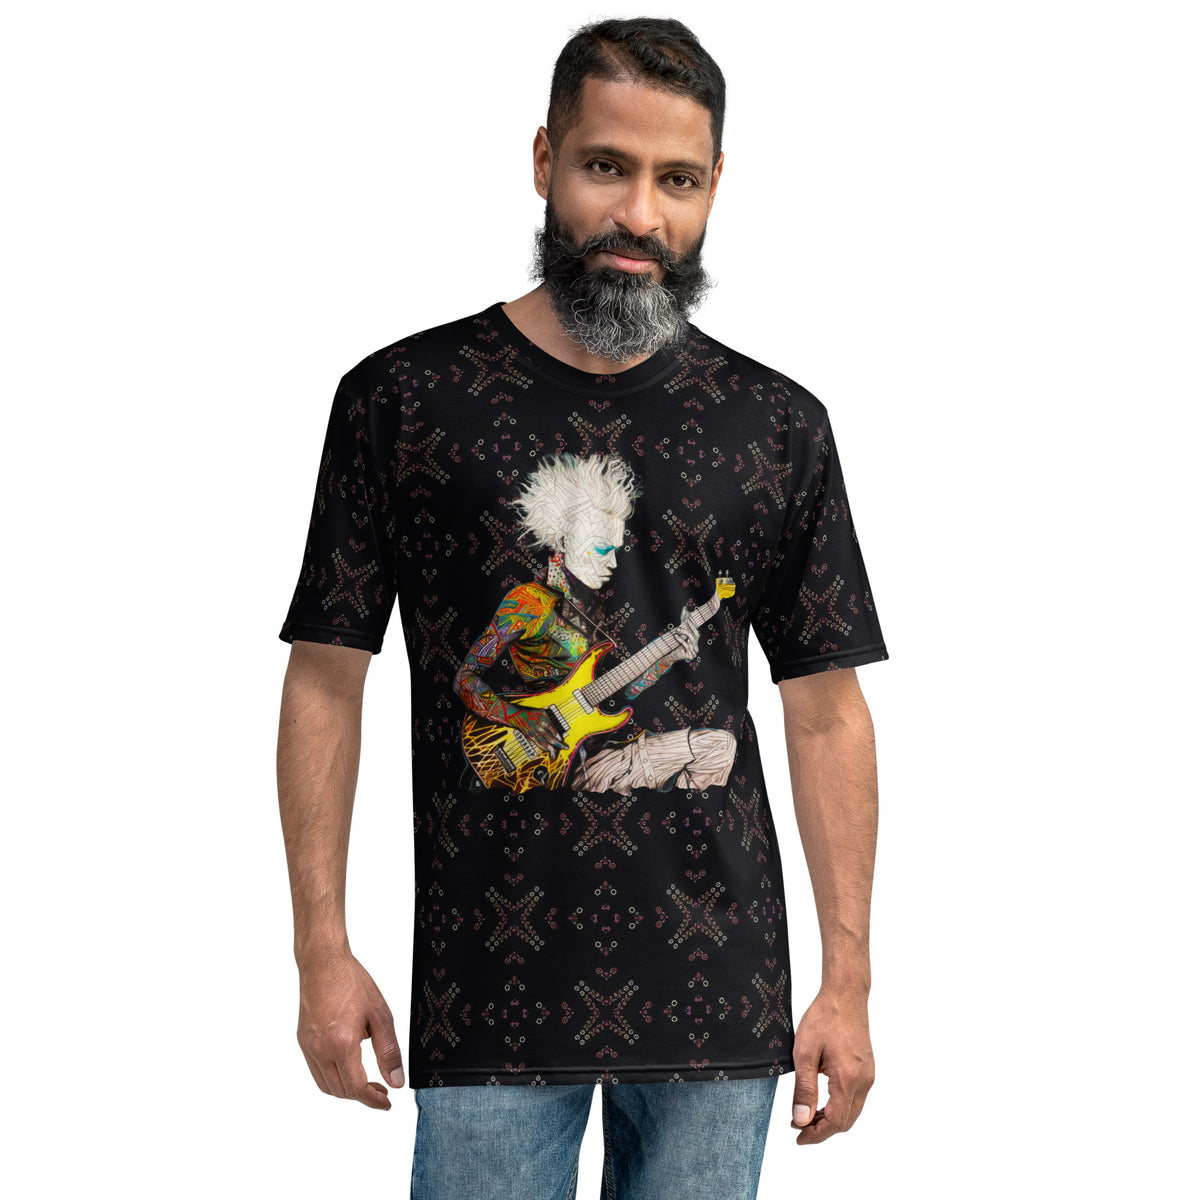 Graphic Fusion men's crew neck t-shirt in black with vibrant design.